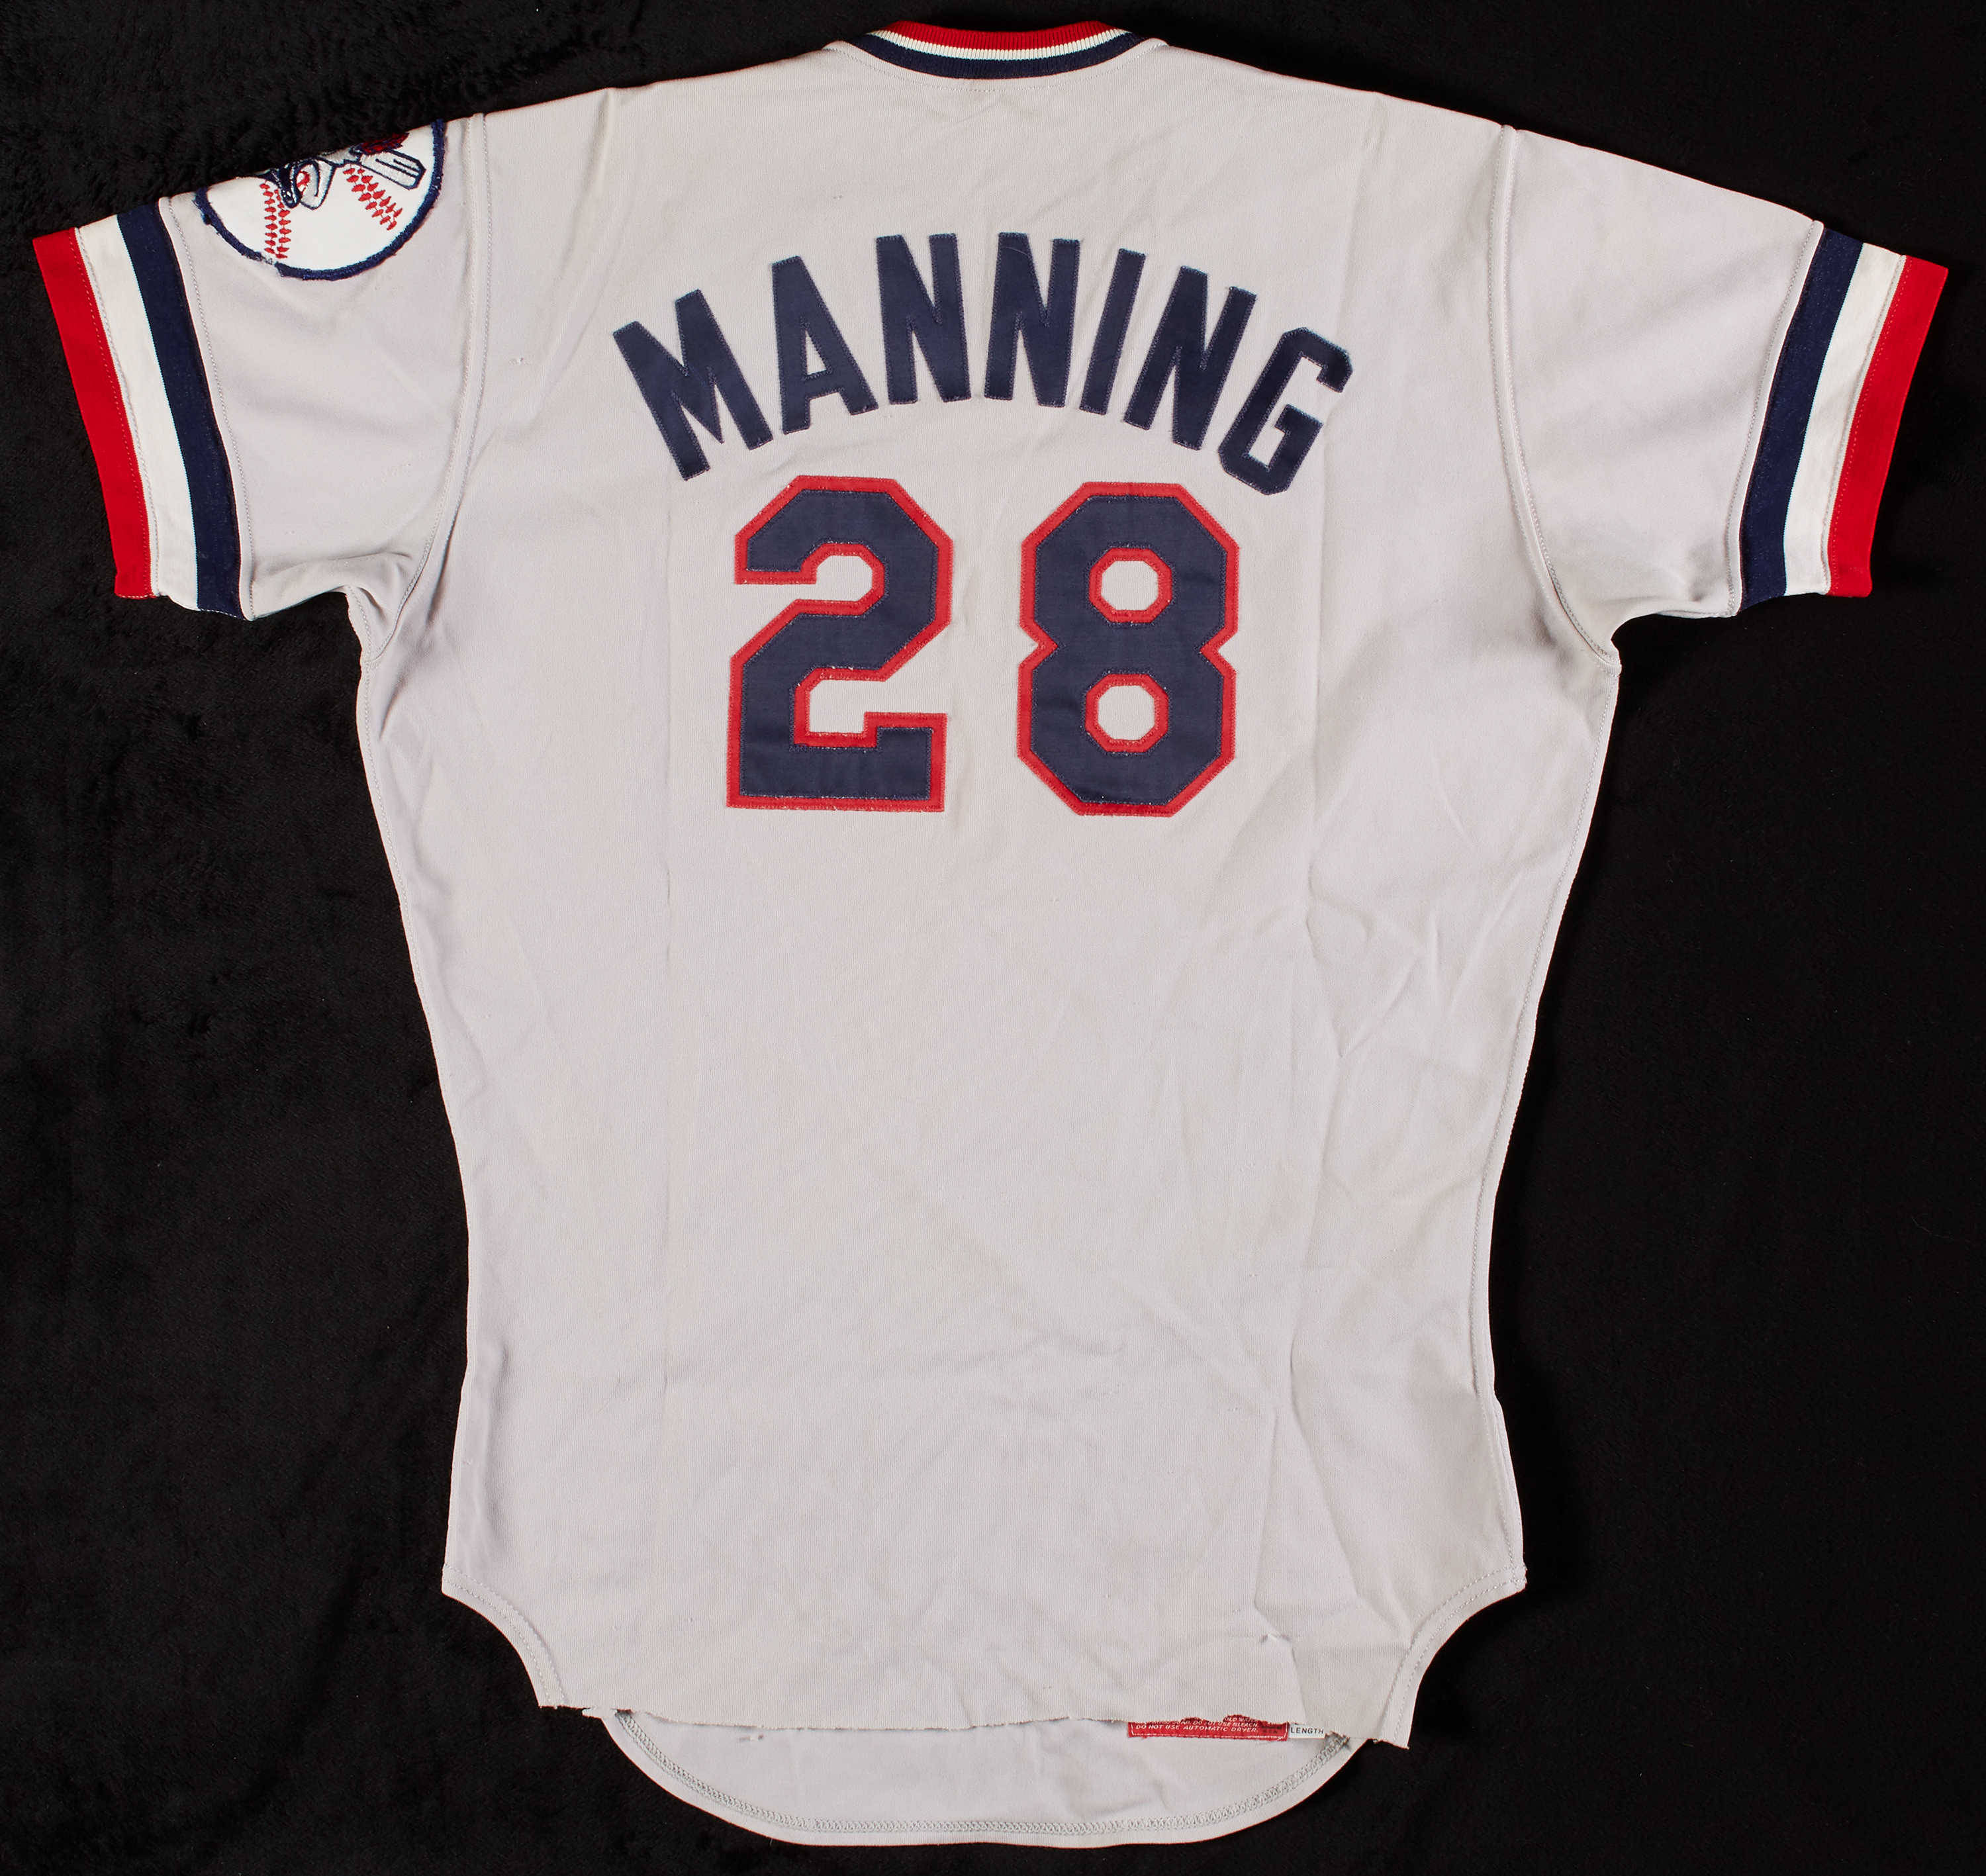 Rick Manning - Cleveland Indians